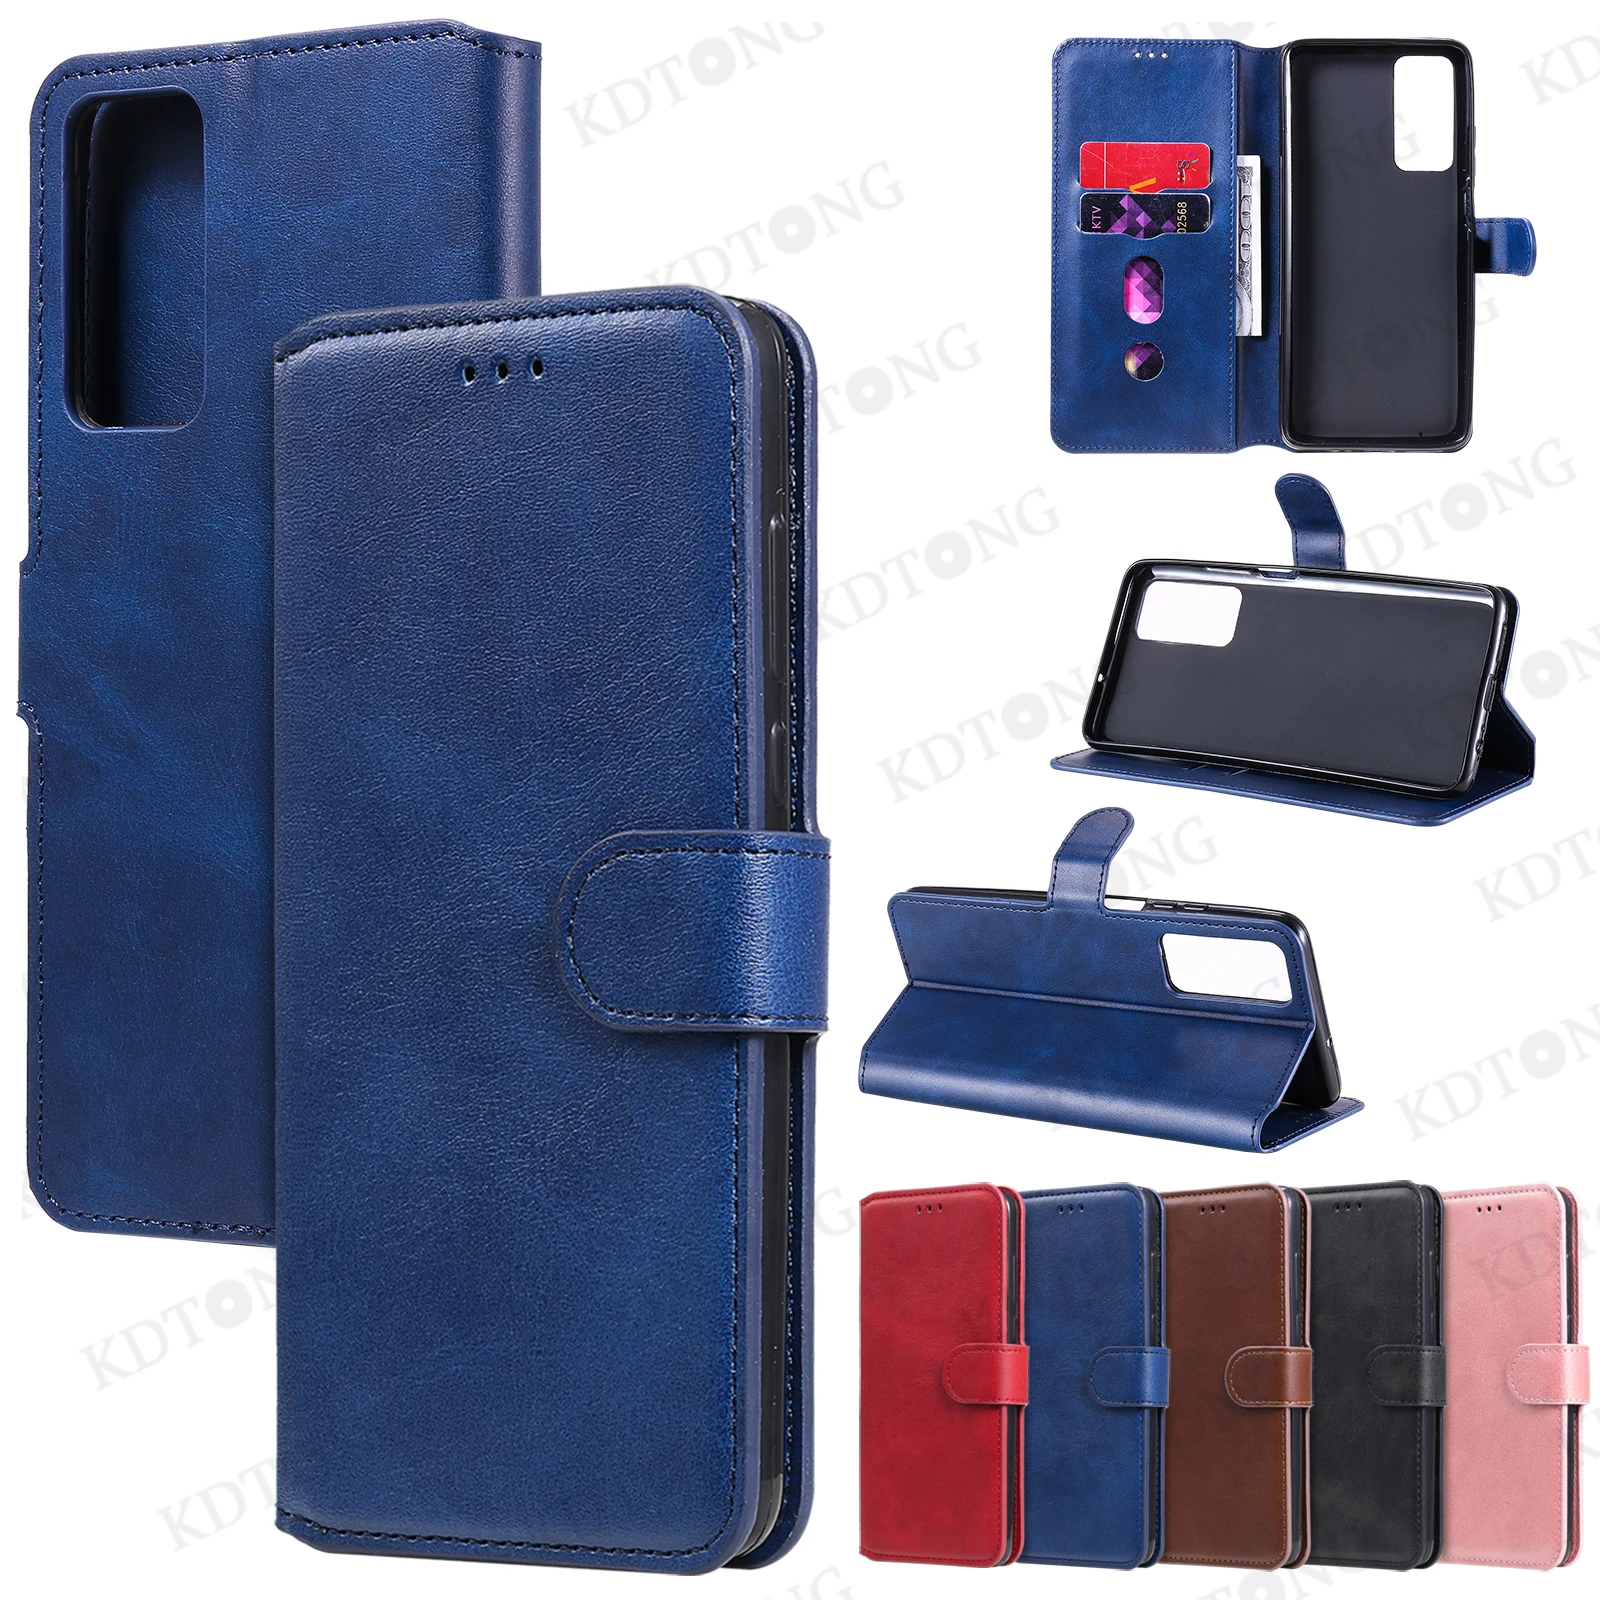 

luxury Retro Flip Leather Card slot Phone Case For HUAWEI Honor 7A 8A 8S 9C 9S 9X 9 10i 10 X 20 20E 20i 30S Play 9A Wallet Cover